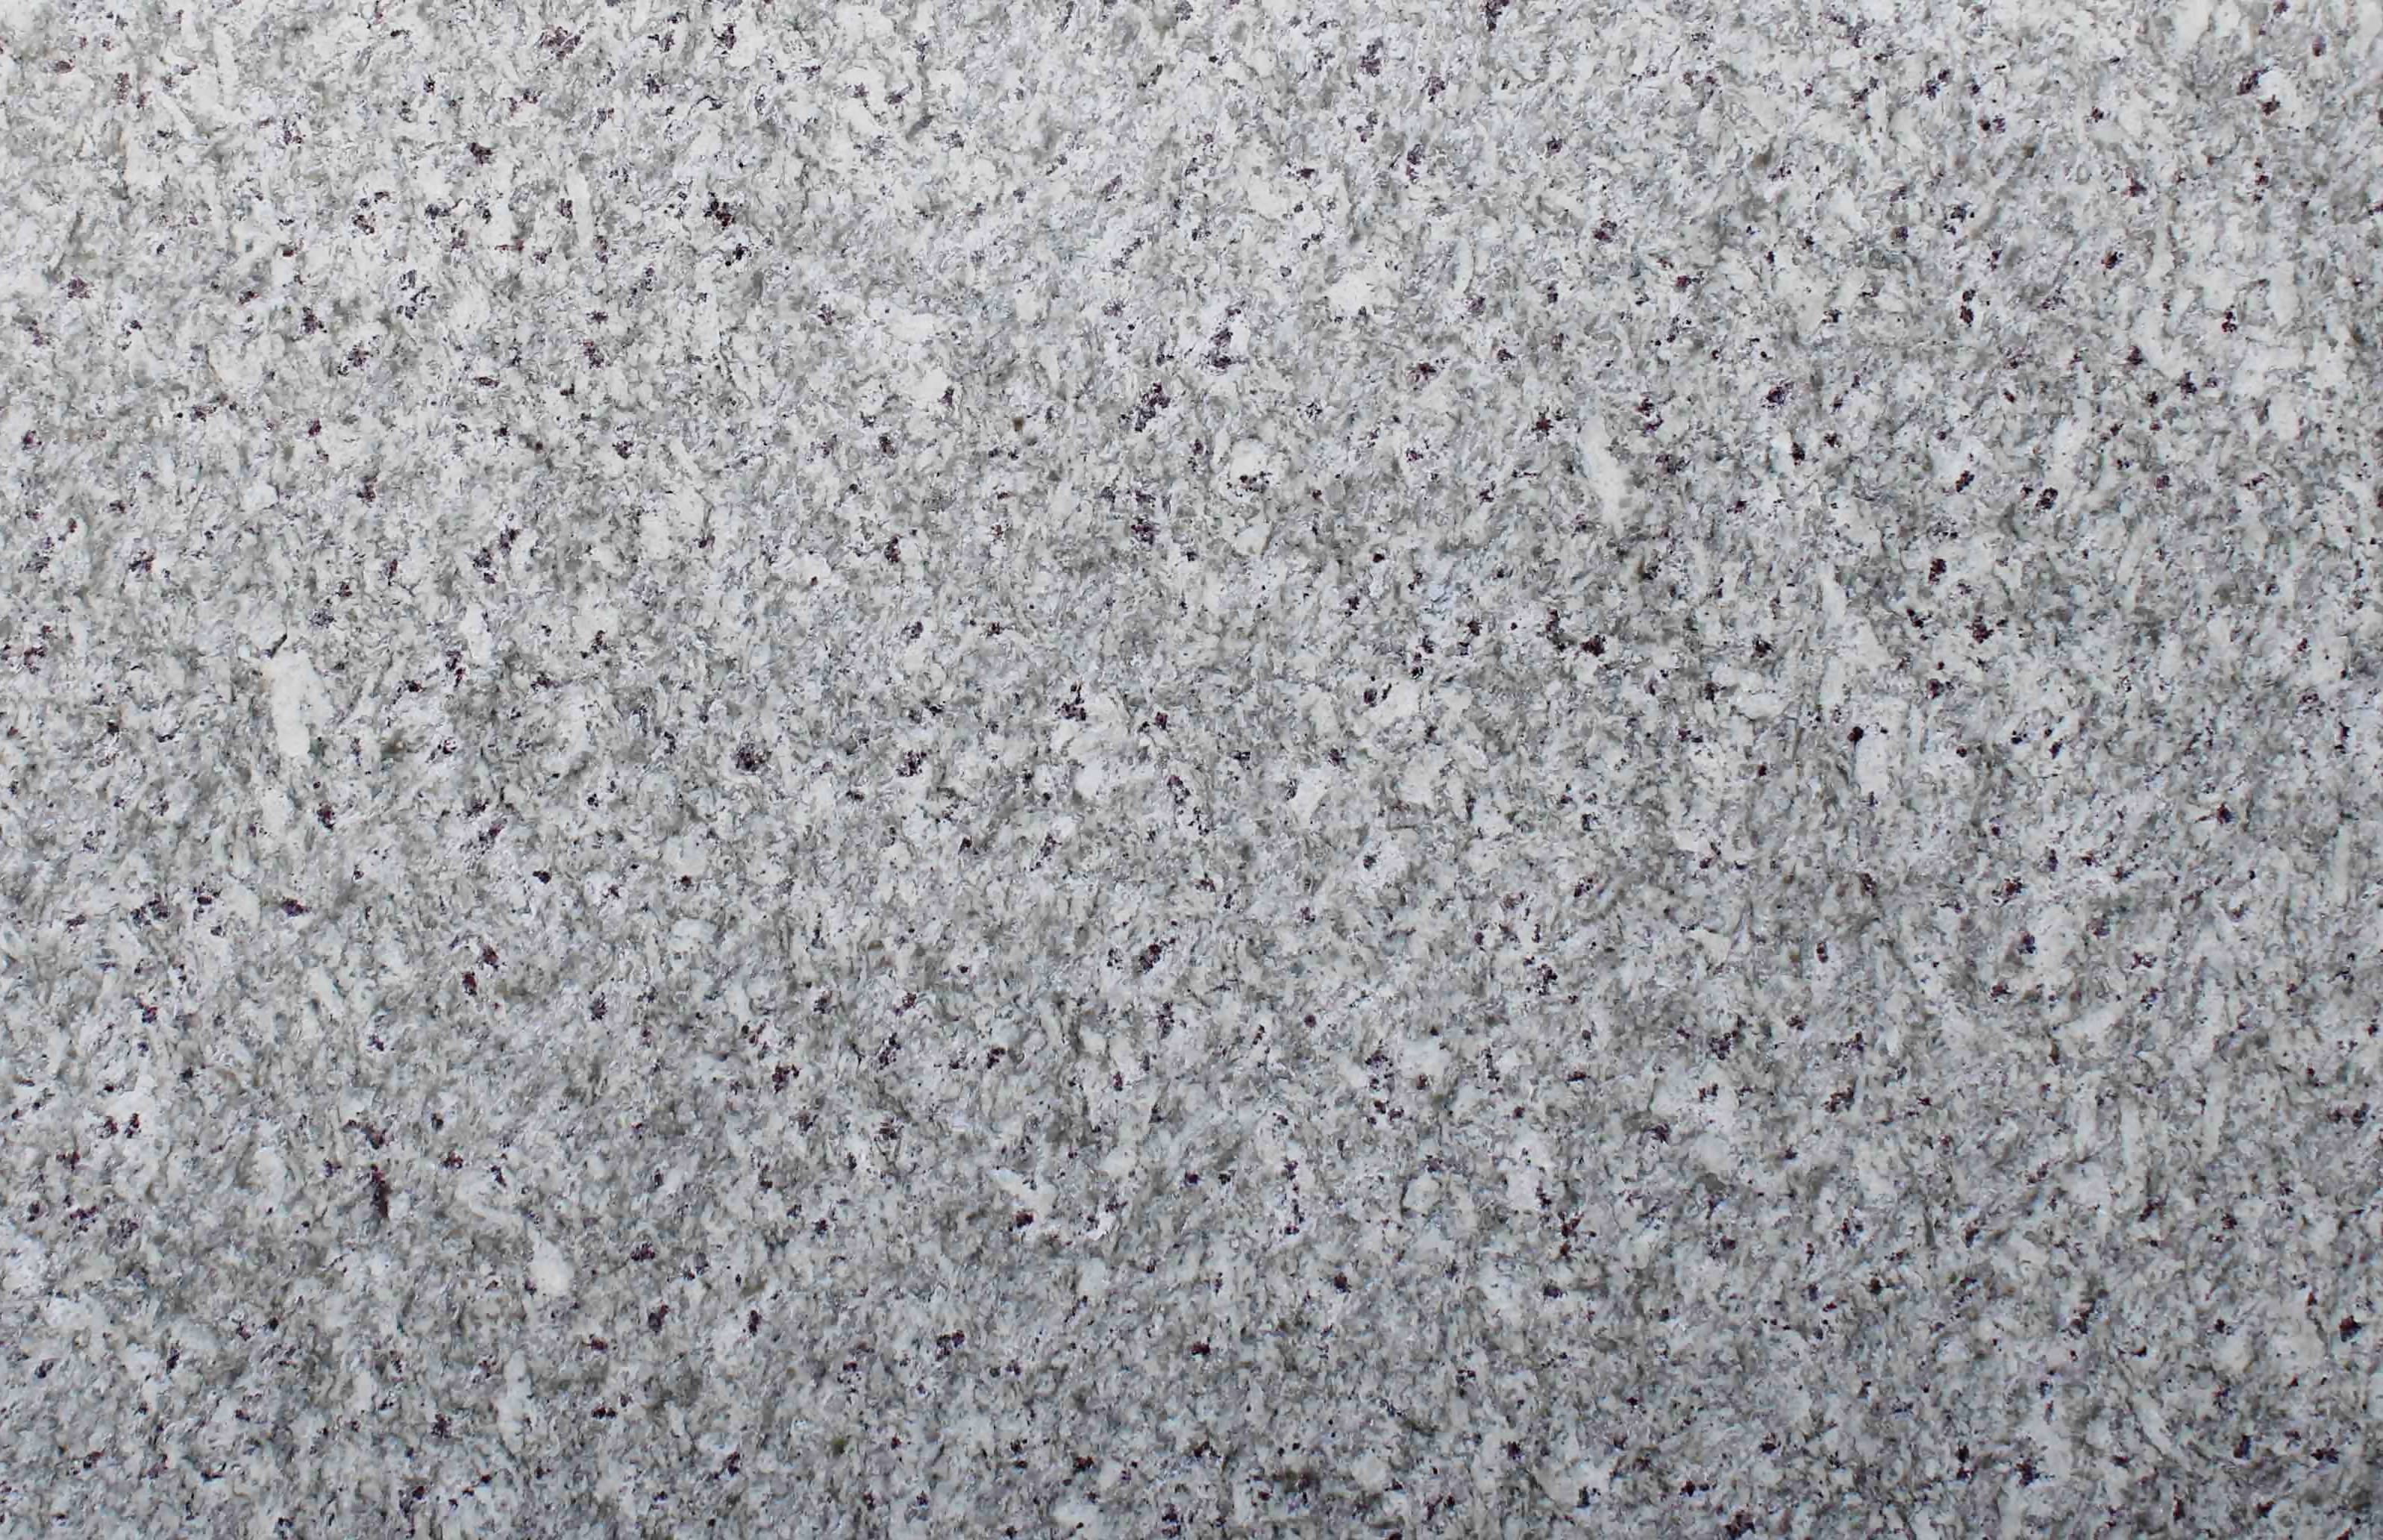 AMBROSIA WHITE GRANITE,Granite,Work-Tops,www.work-tops.com